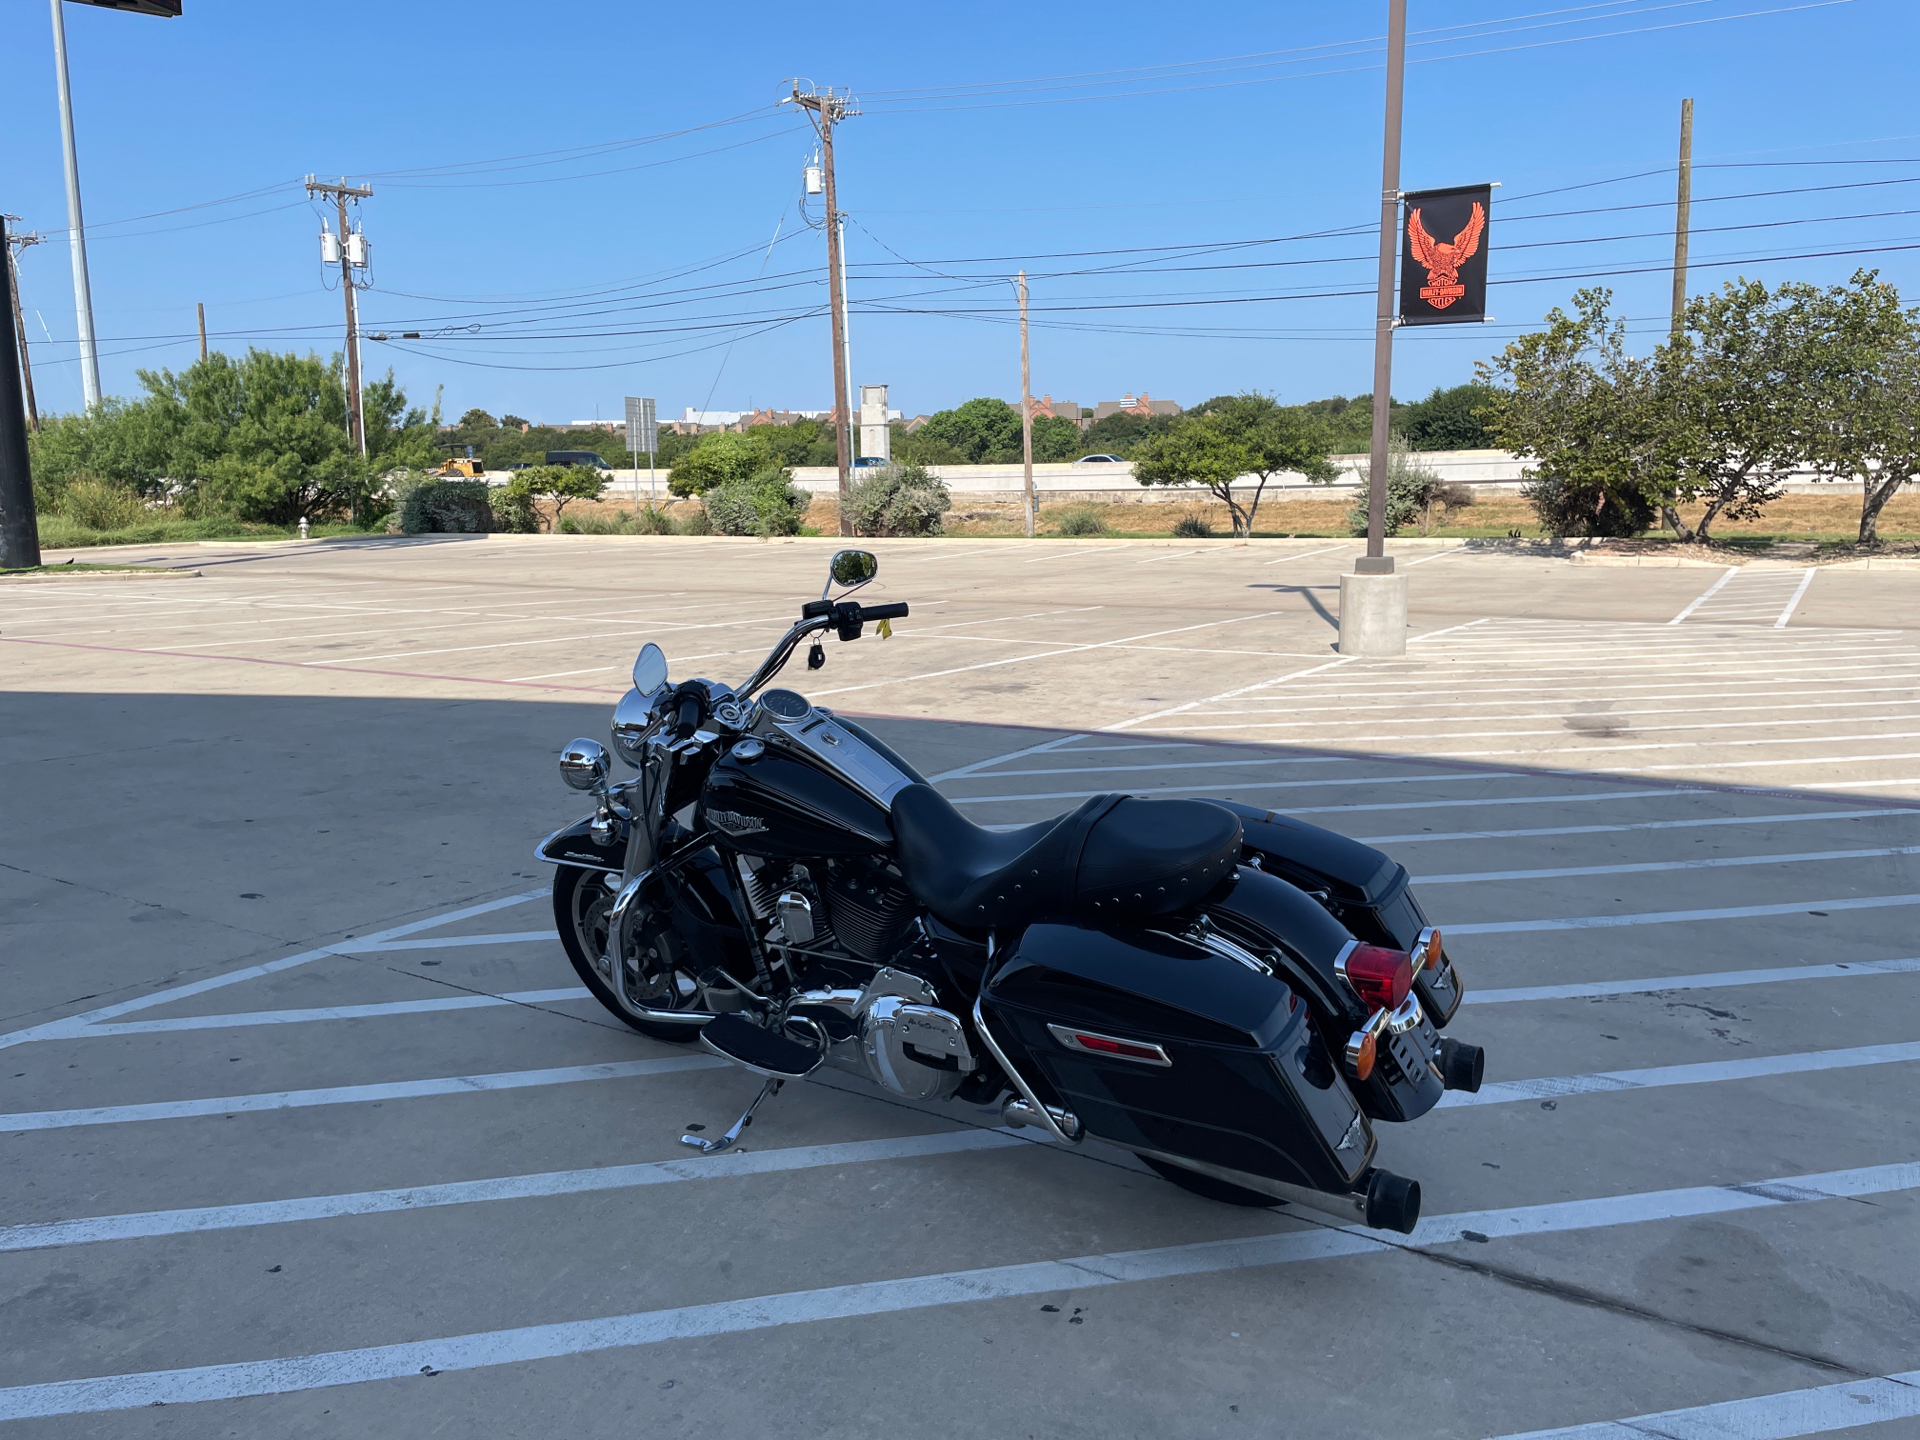 2016 Harley-Davidson Road King® in San Antonio, Texas - Photo 6